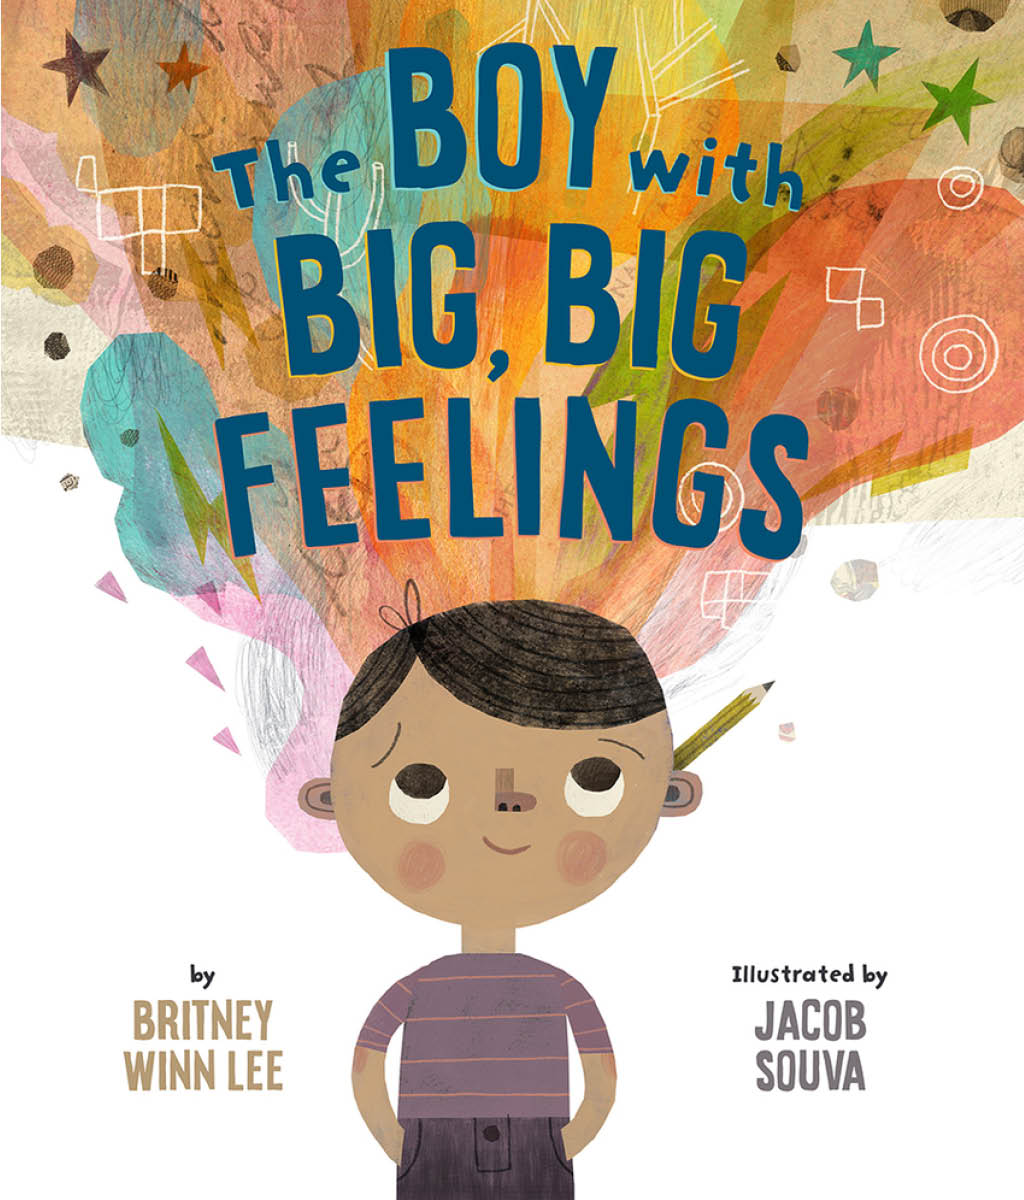 The Boy with Big, Big Feelings by Lee Britney Winn &amp; Souva Jacob